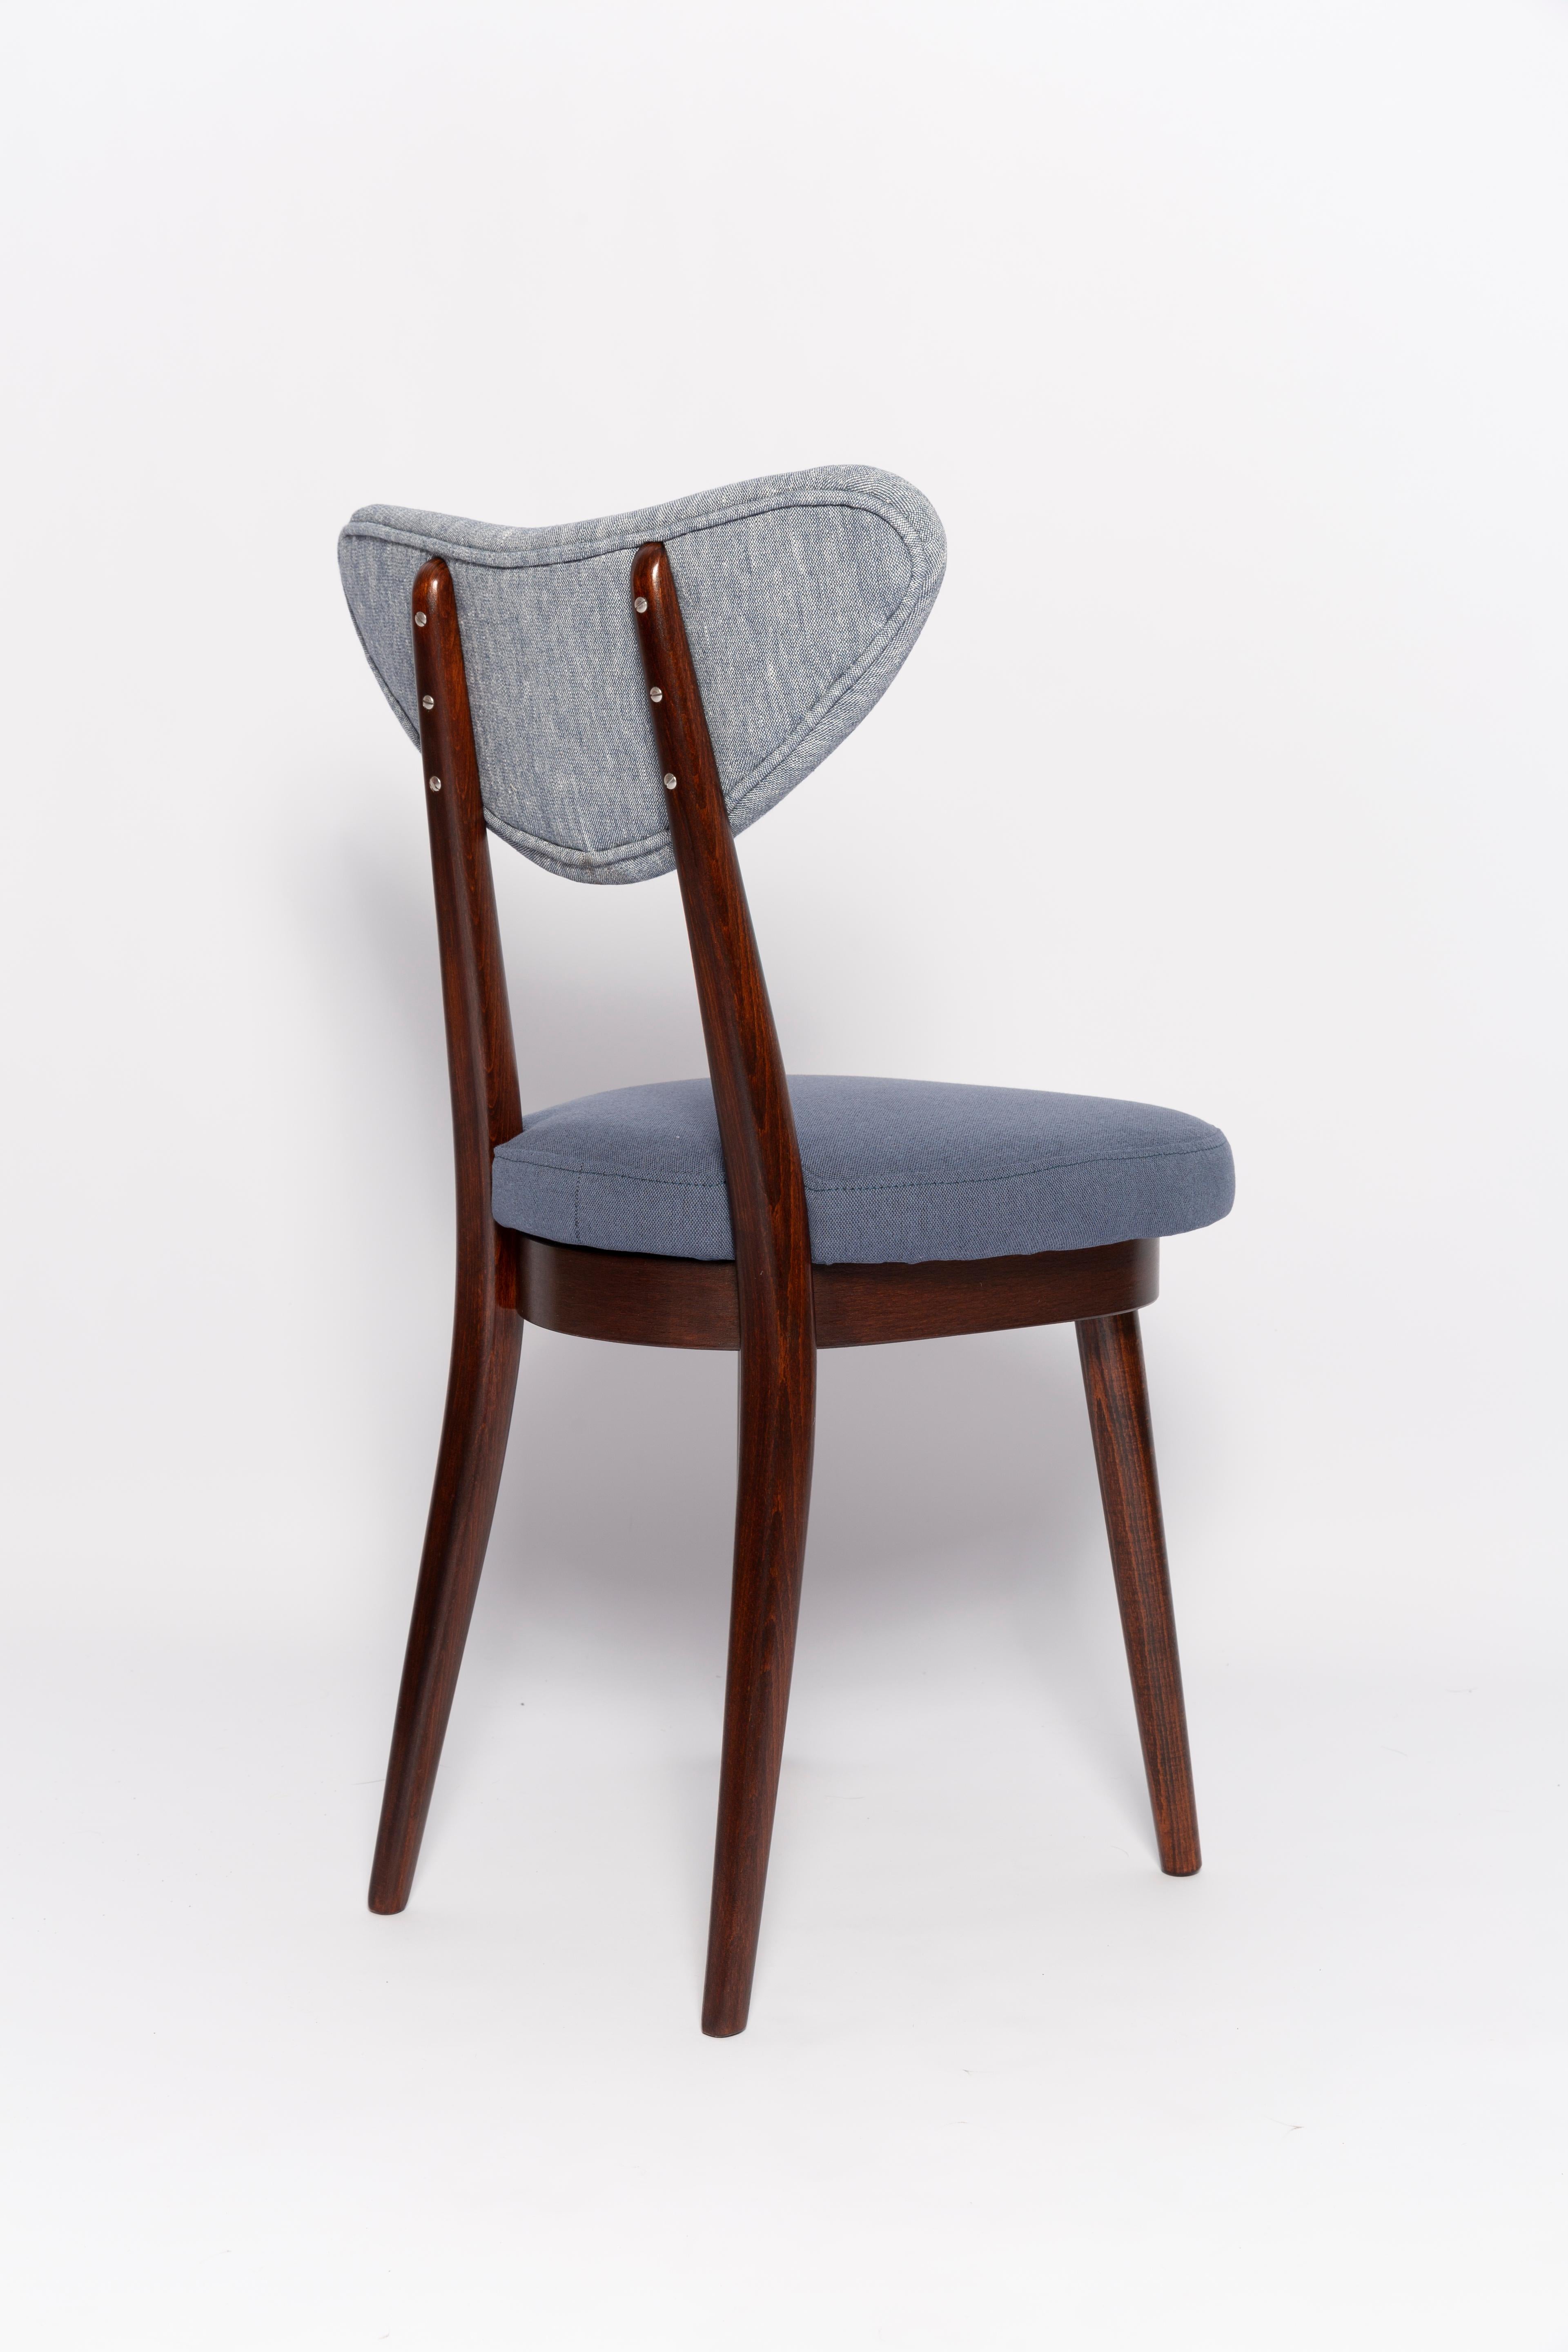 20th Century Mid Century Light and Medium Blue Denim Heart Chair, Europe, 1960s For Sale